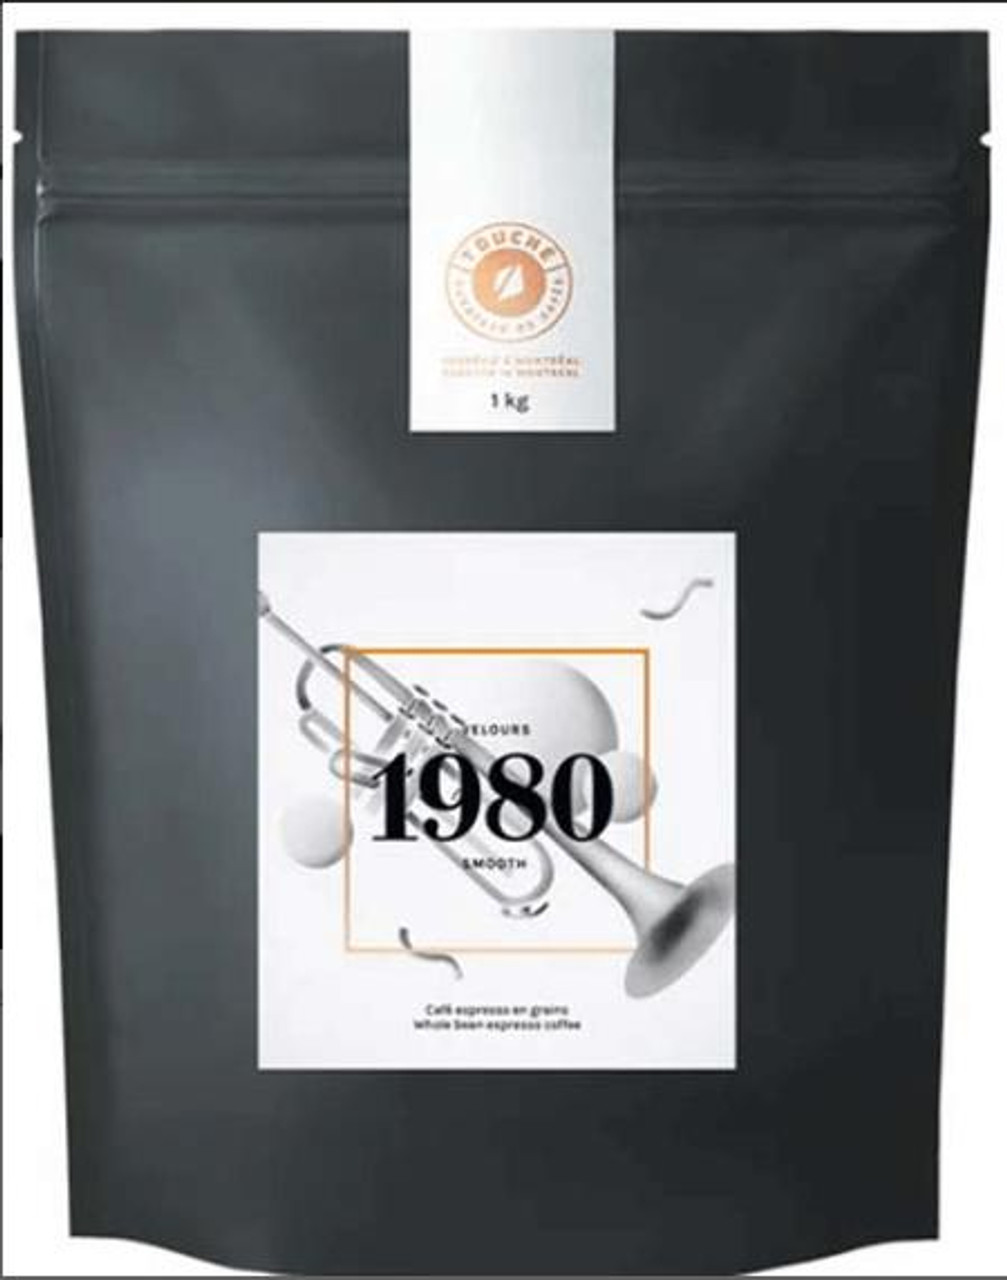  Café Touché 1980 Medium Blend Coffee Beans - 1 kg (2.2 lbs) Bag (6/Case) 